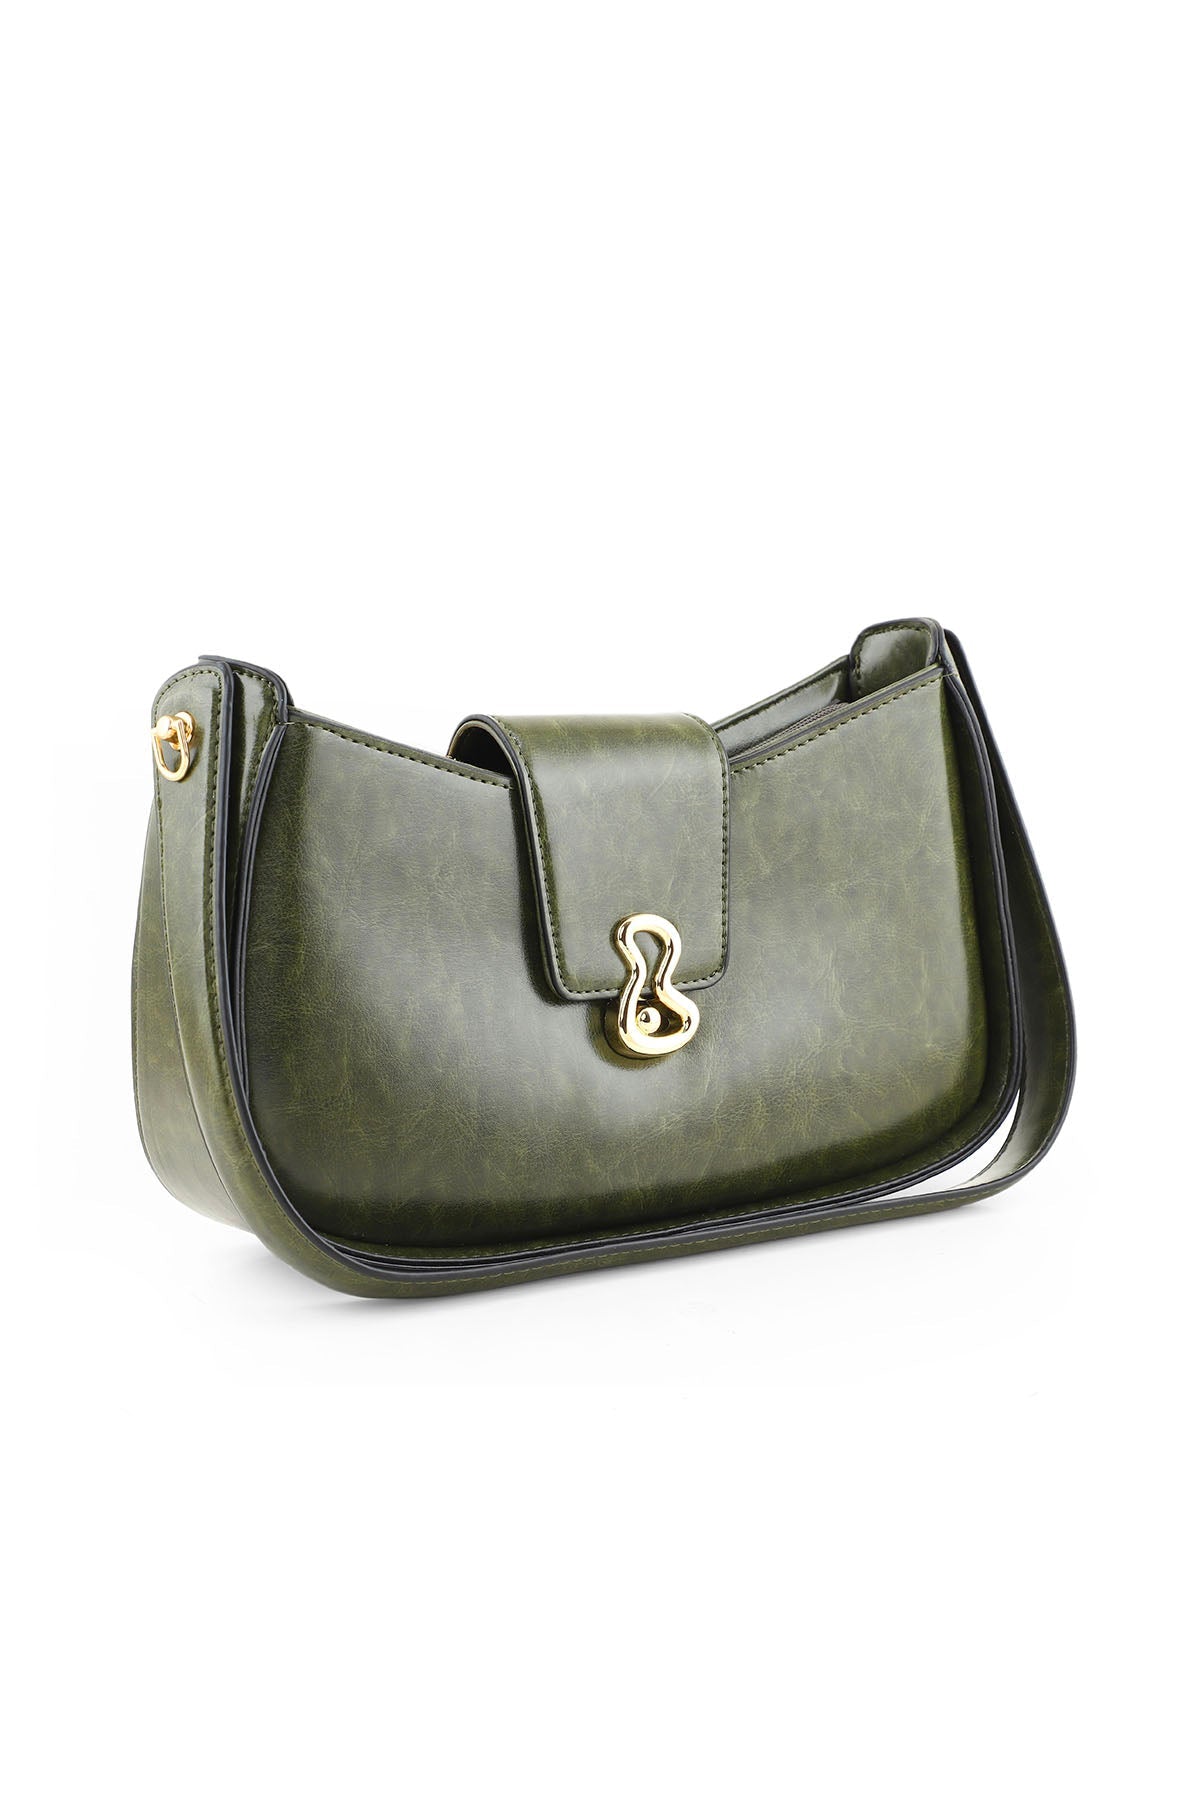 Hobo Hand Bags B14974-Green